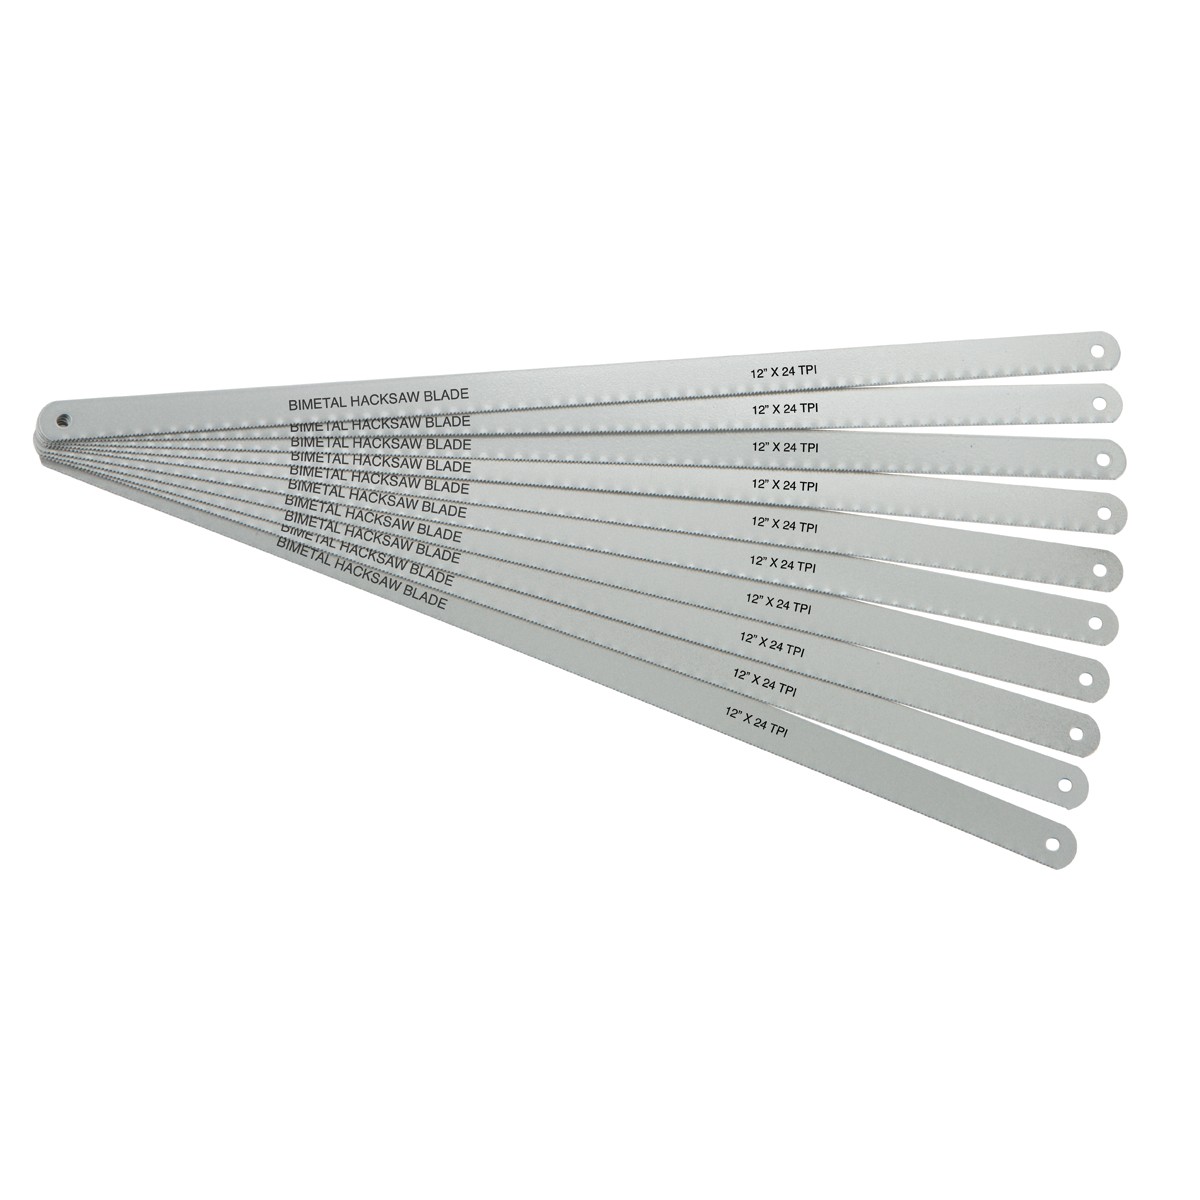 12 in. 24 TPI Bi-metal Hacksaw Blades 10 Pk.